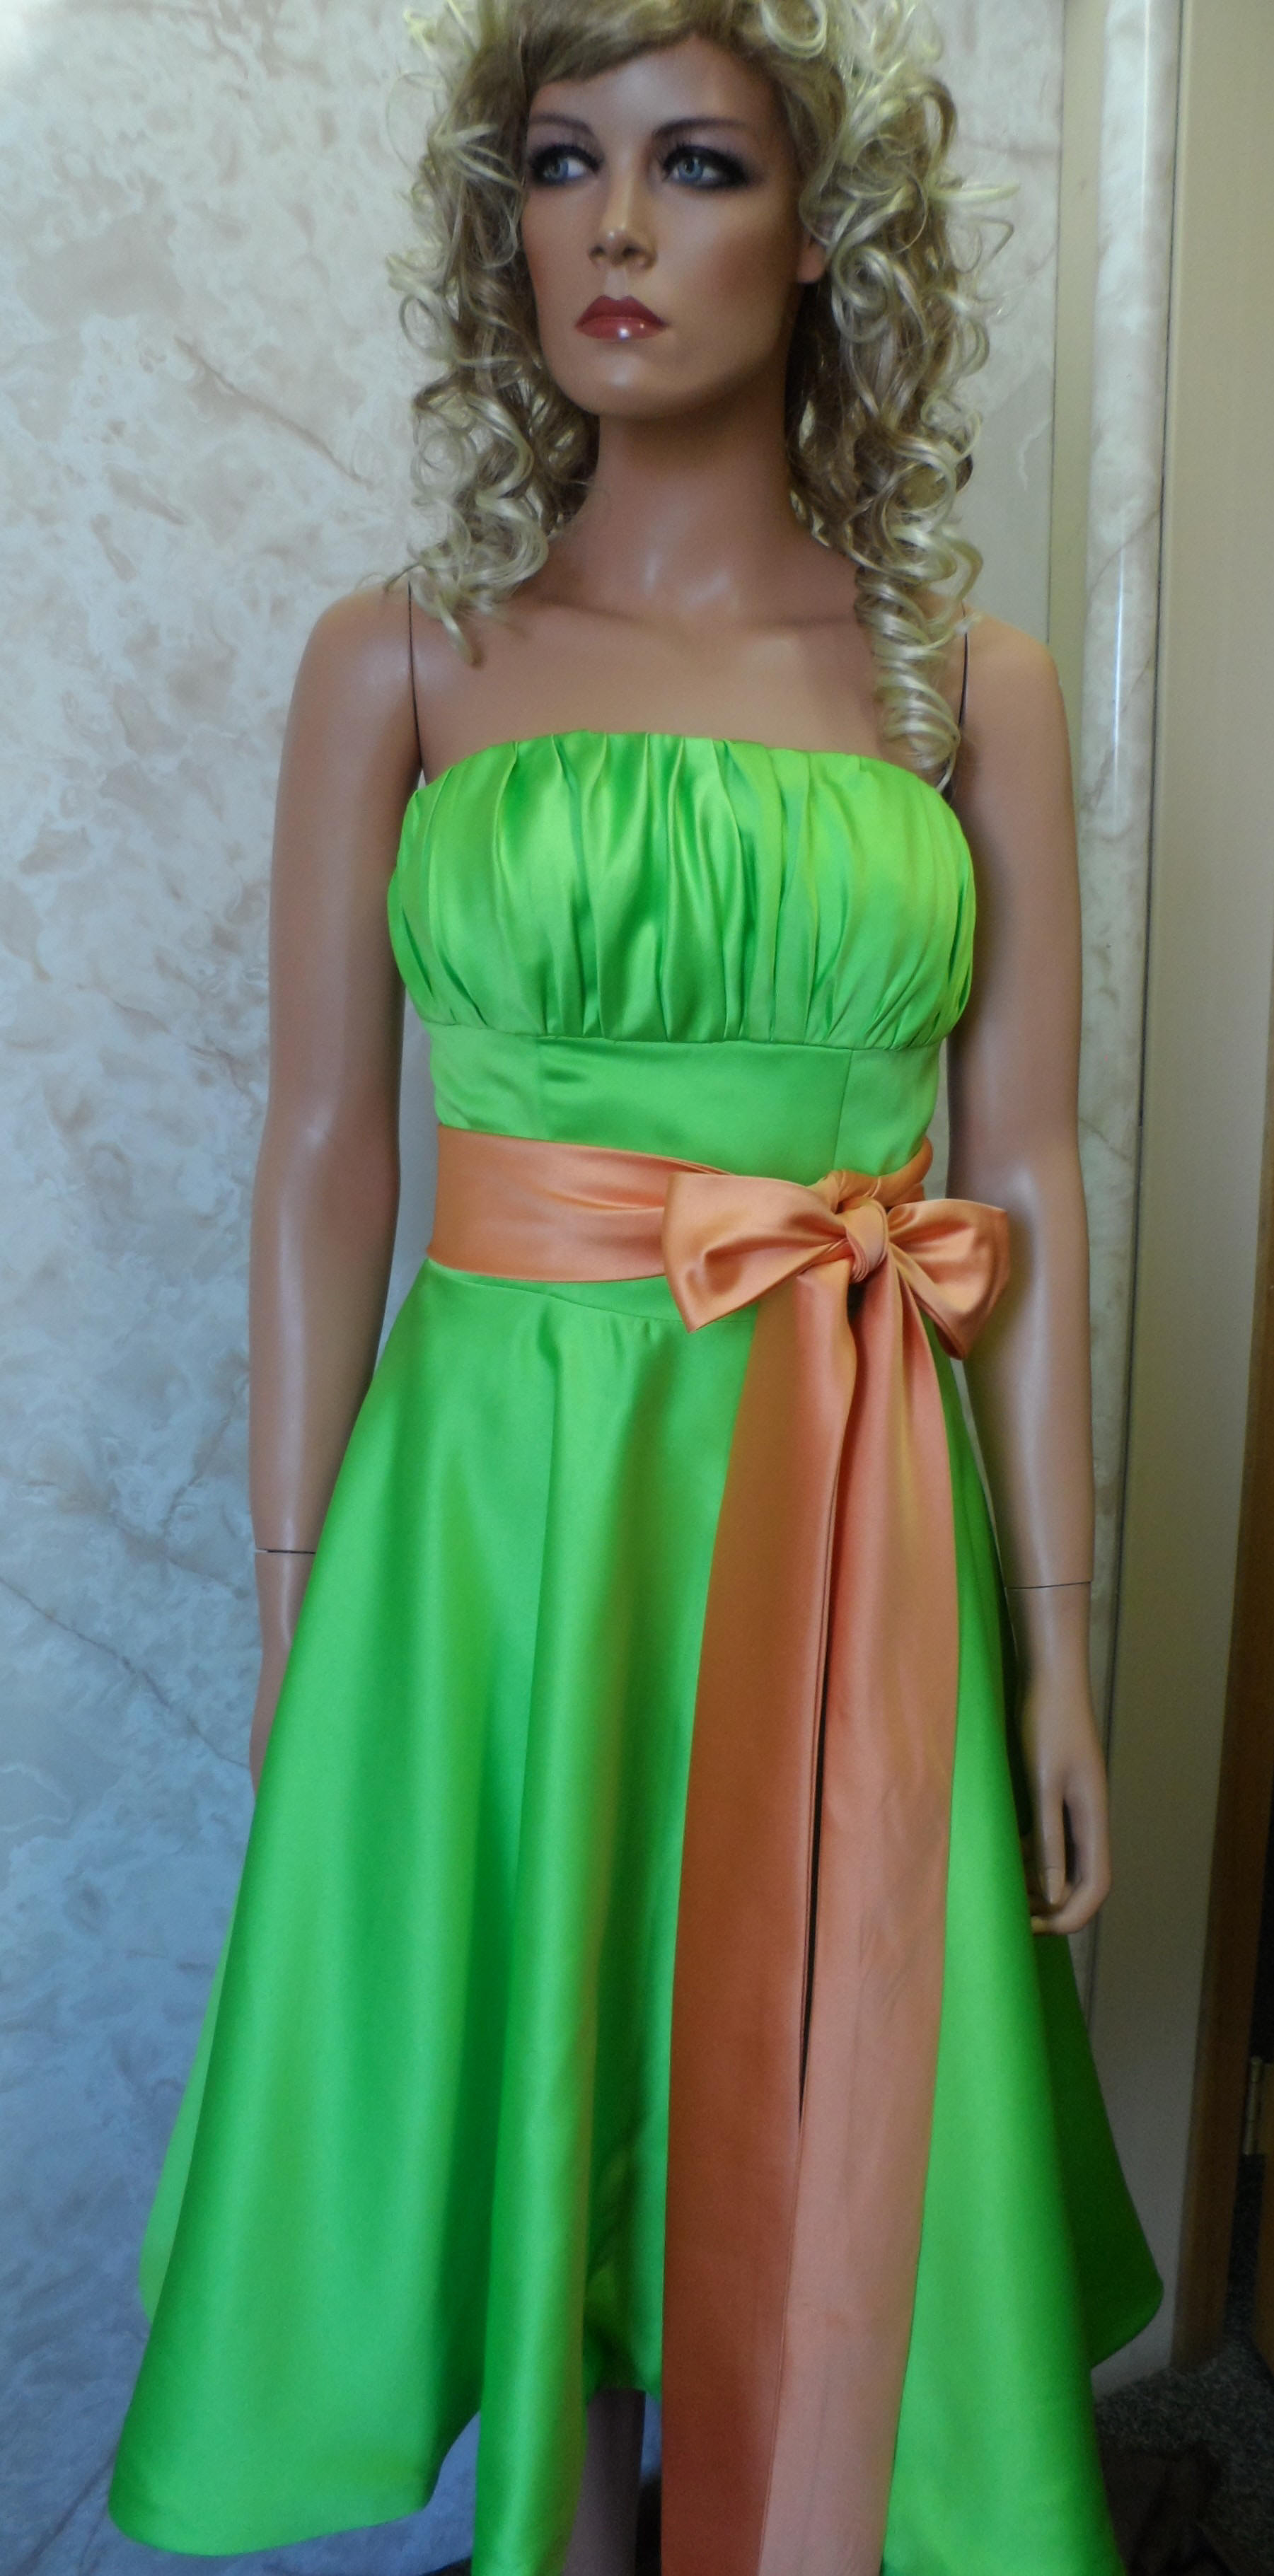 Lime green strapless dress with pumpkin sash